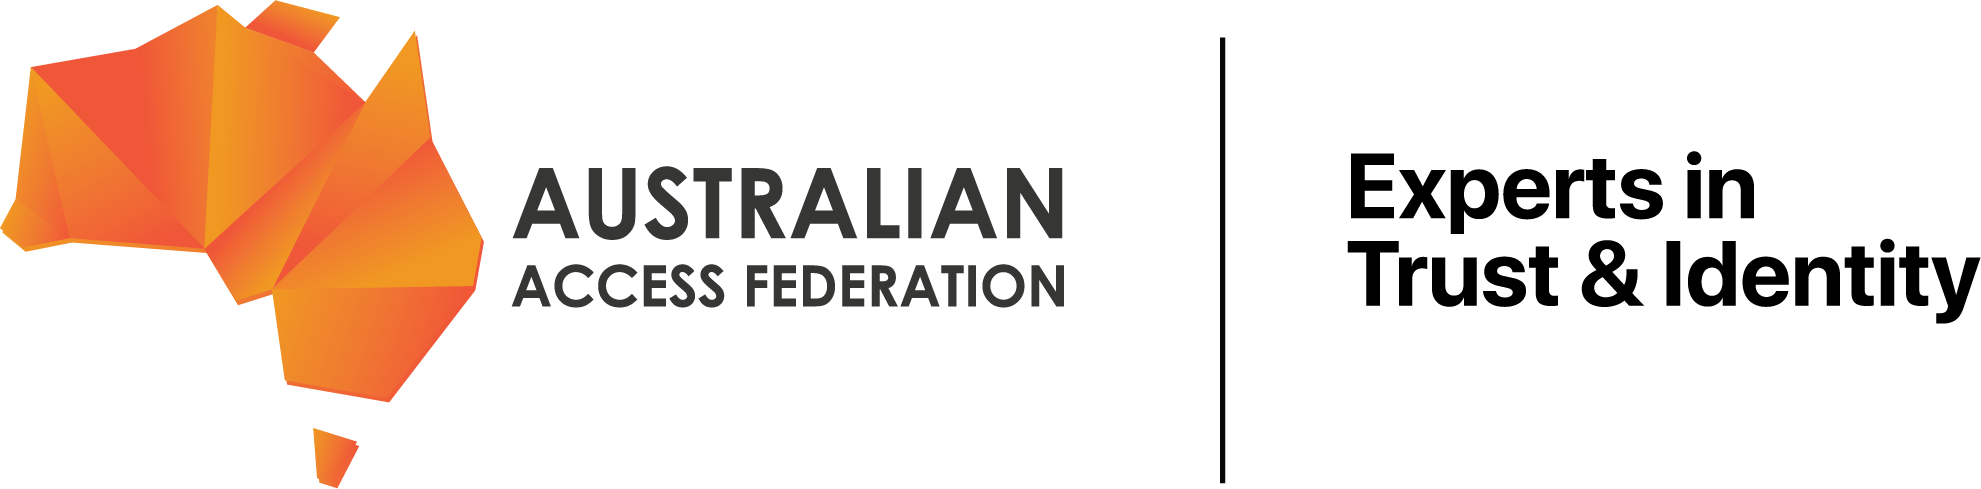 Australian Access Federation - Trust and Identity